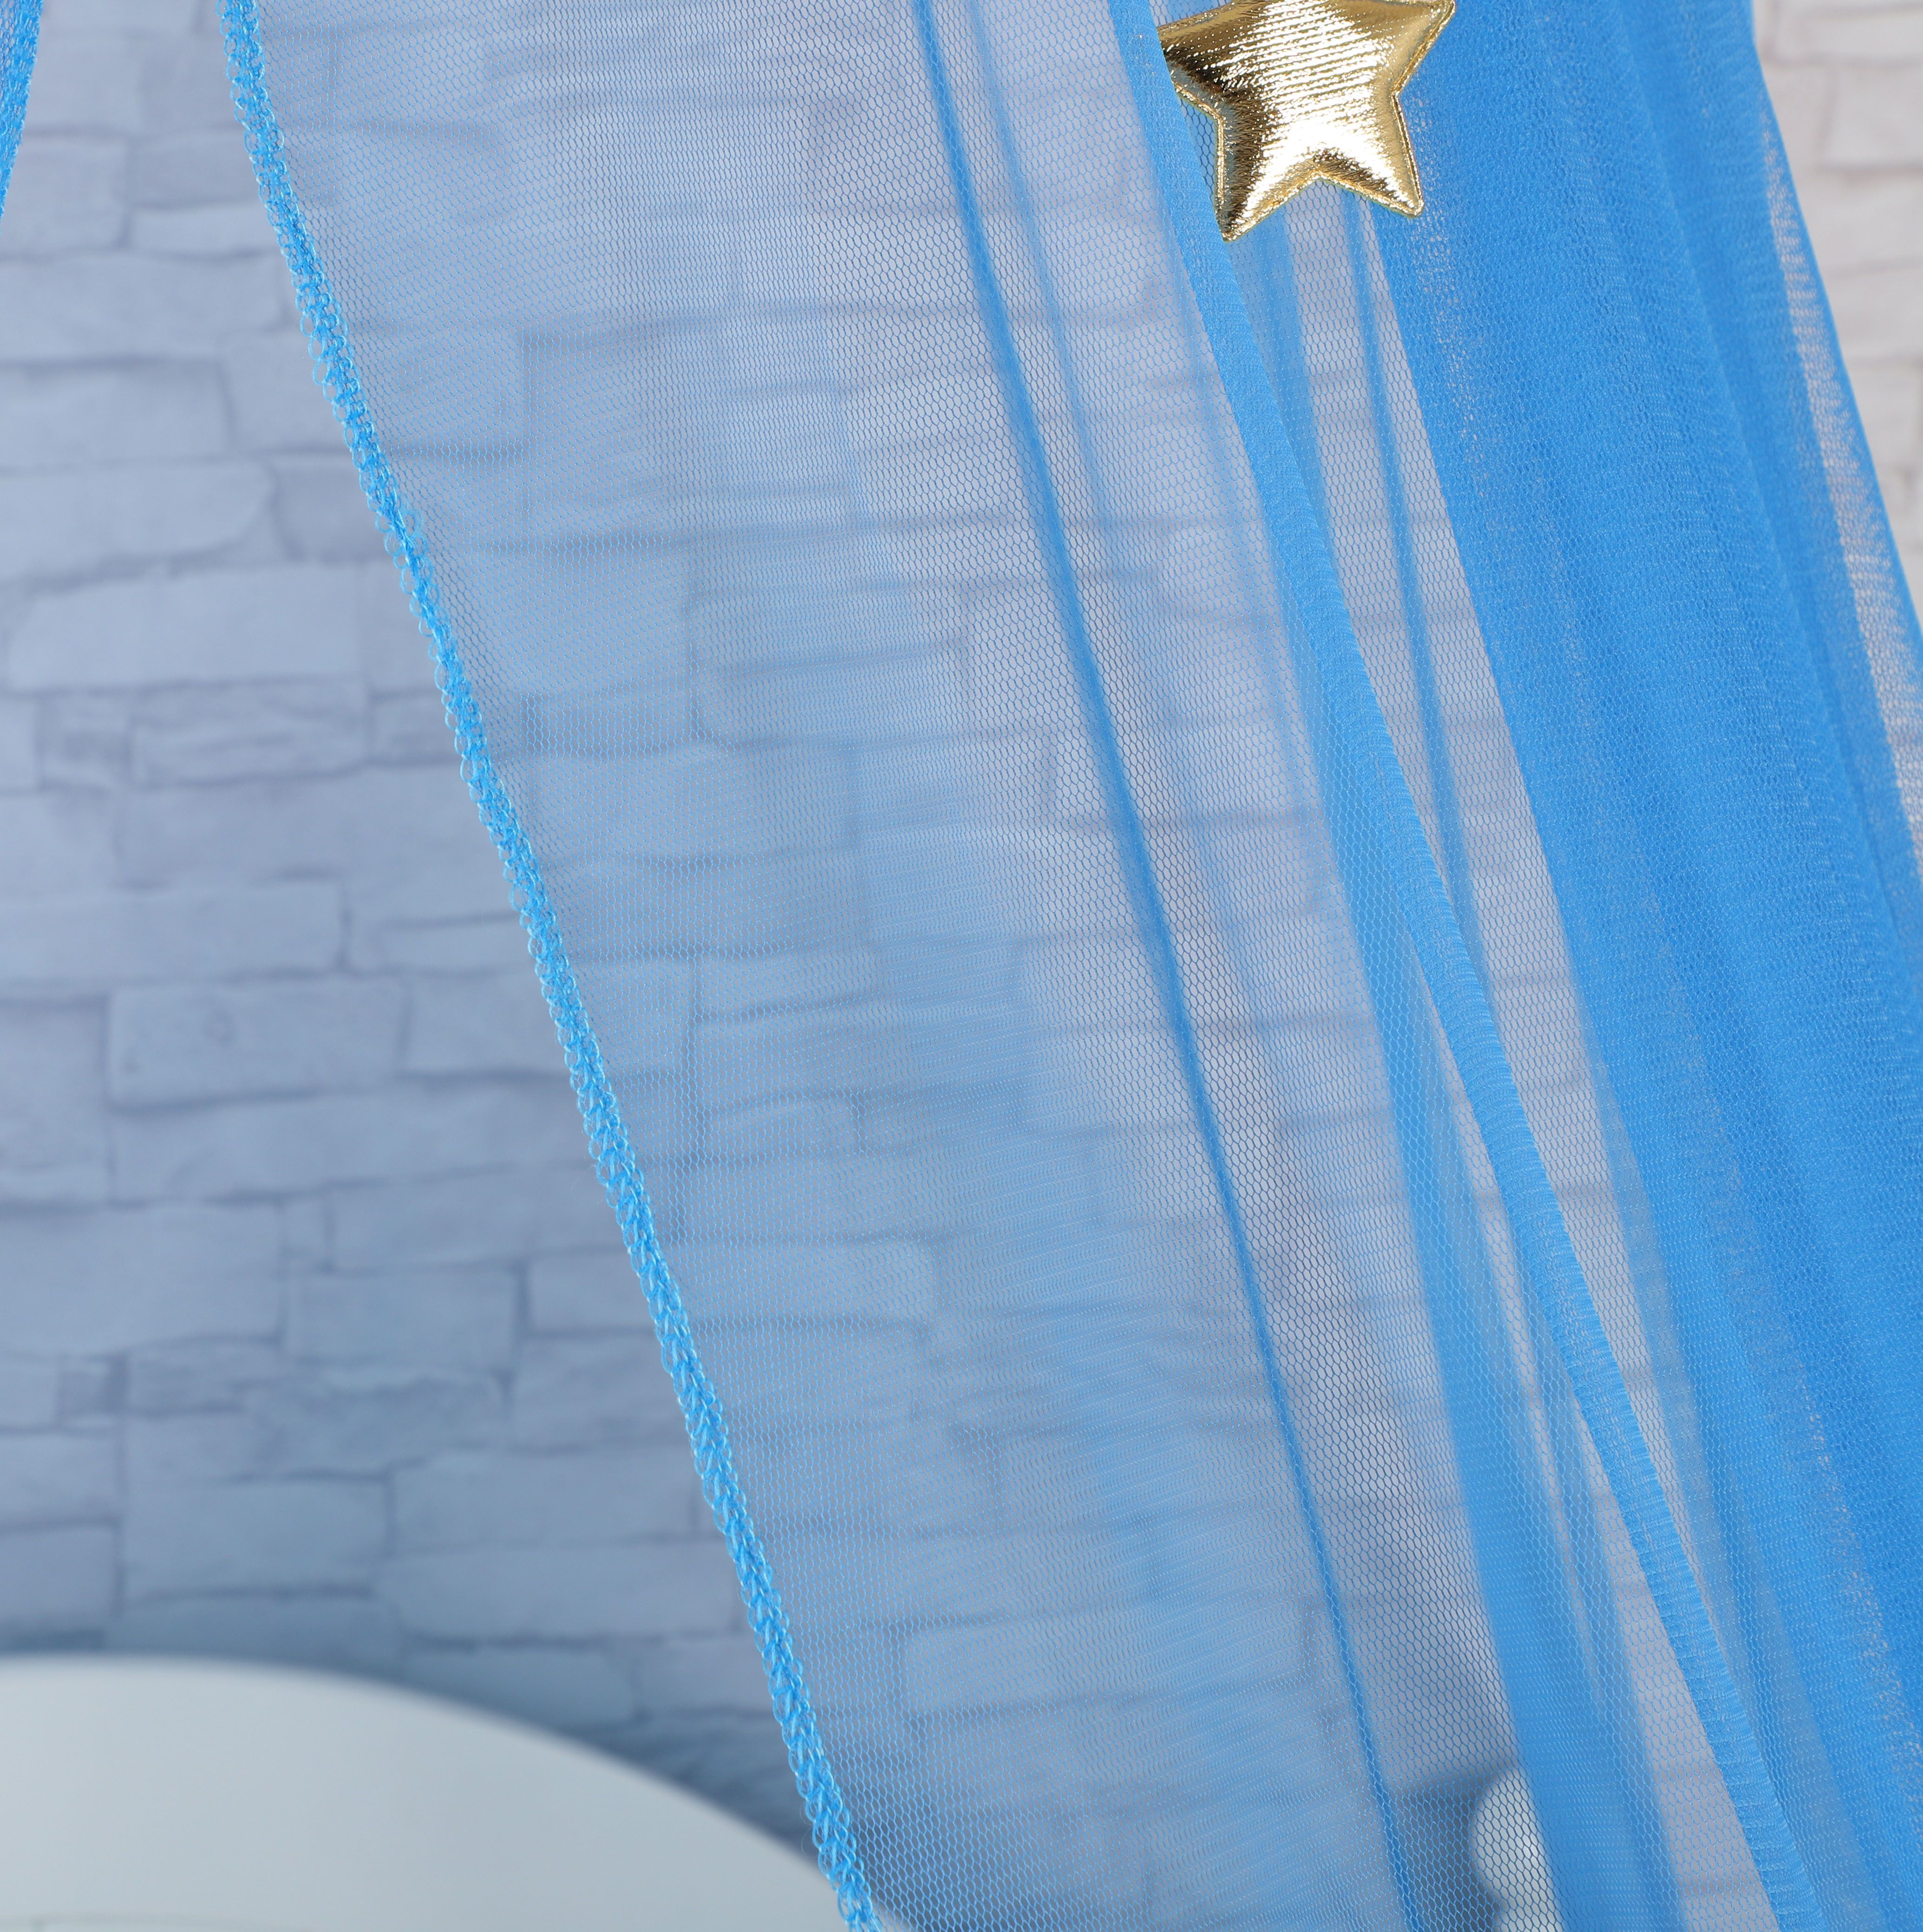 2020 popular estilo Gloden estrellas decoración circular azul mosquitera colgante